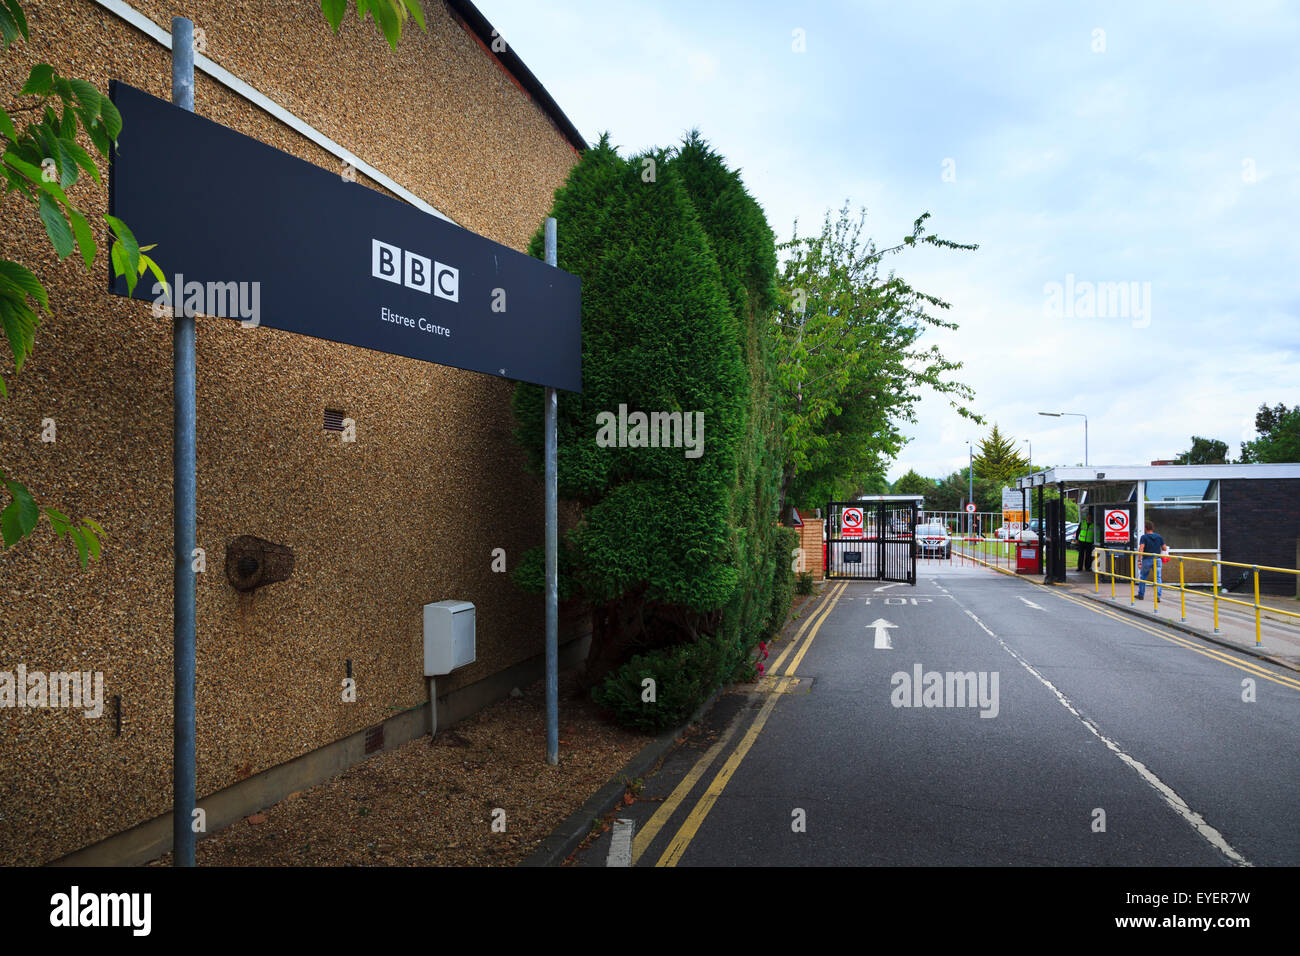 BBC Elstree Studios entrance and sign Stock Photo